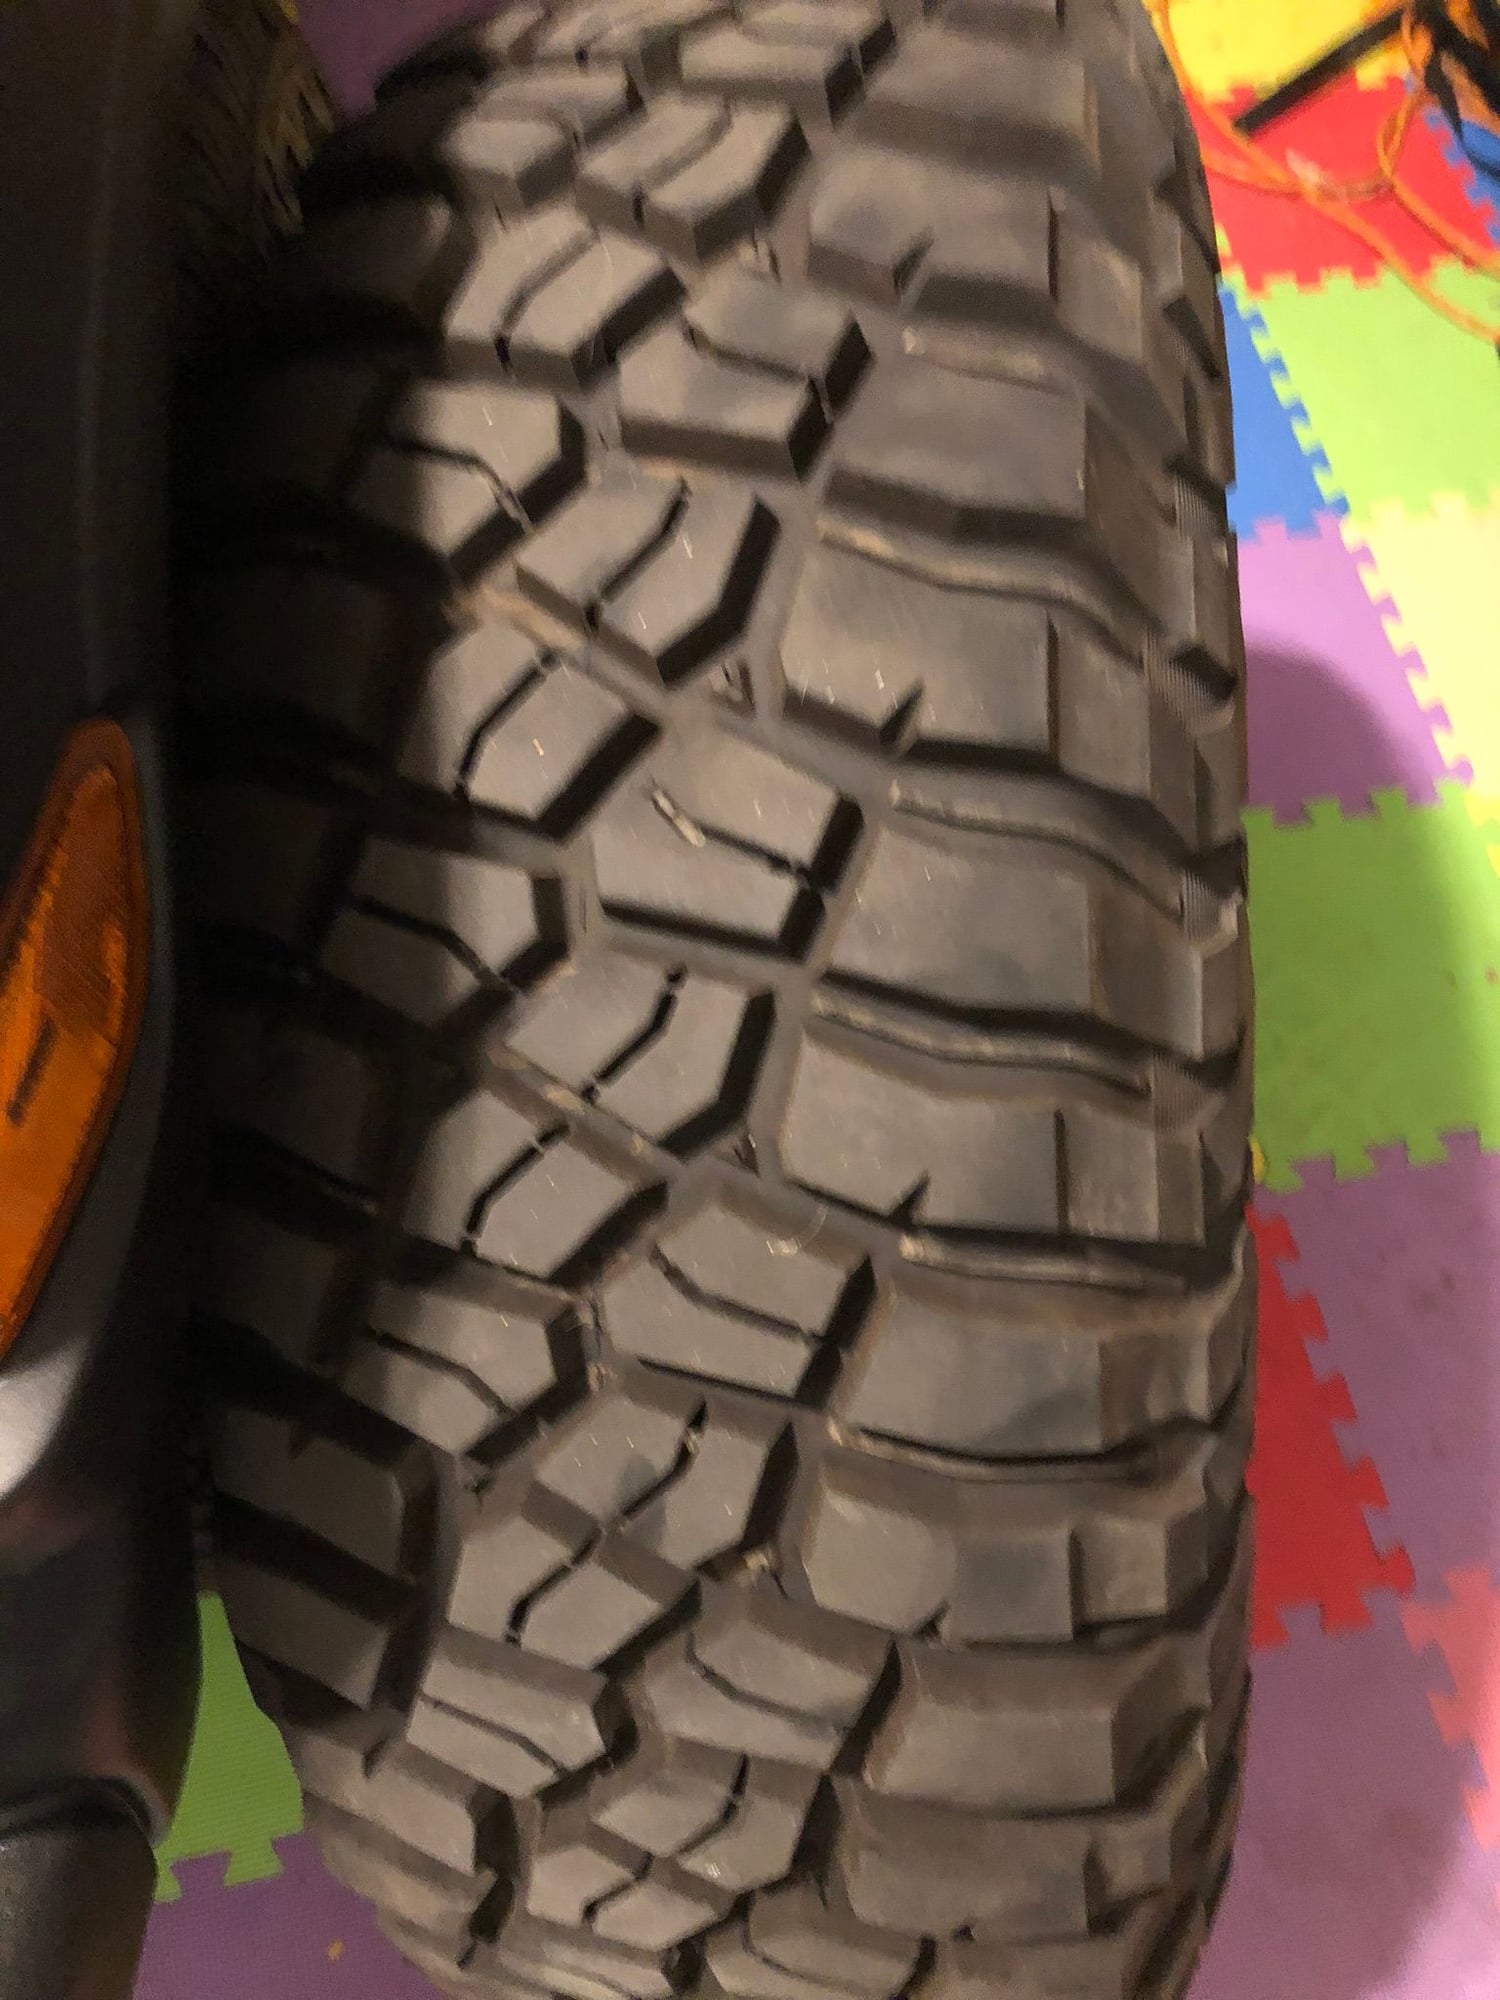 Wheels and Tires/Axles - New Set of 35x12.50R15 BFG KM3 Mud Terrains - New - Anthem, AZ 85086, United States